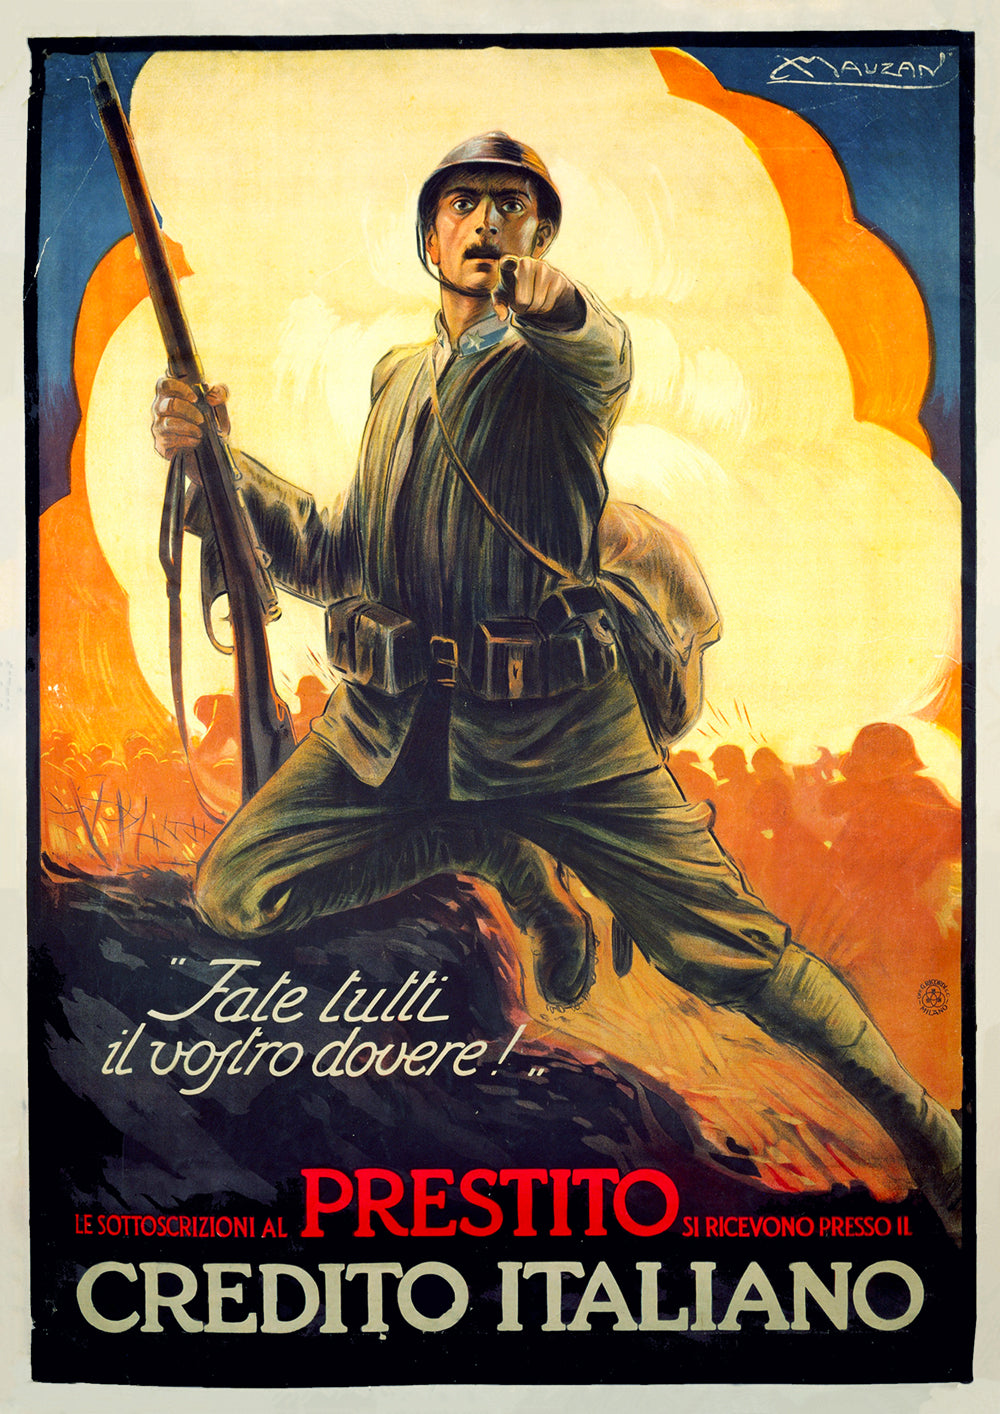 Everyone do your duty! – Italian World War One poster